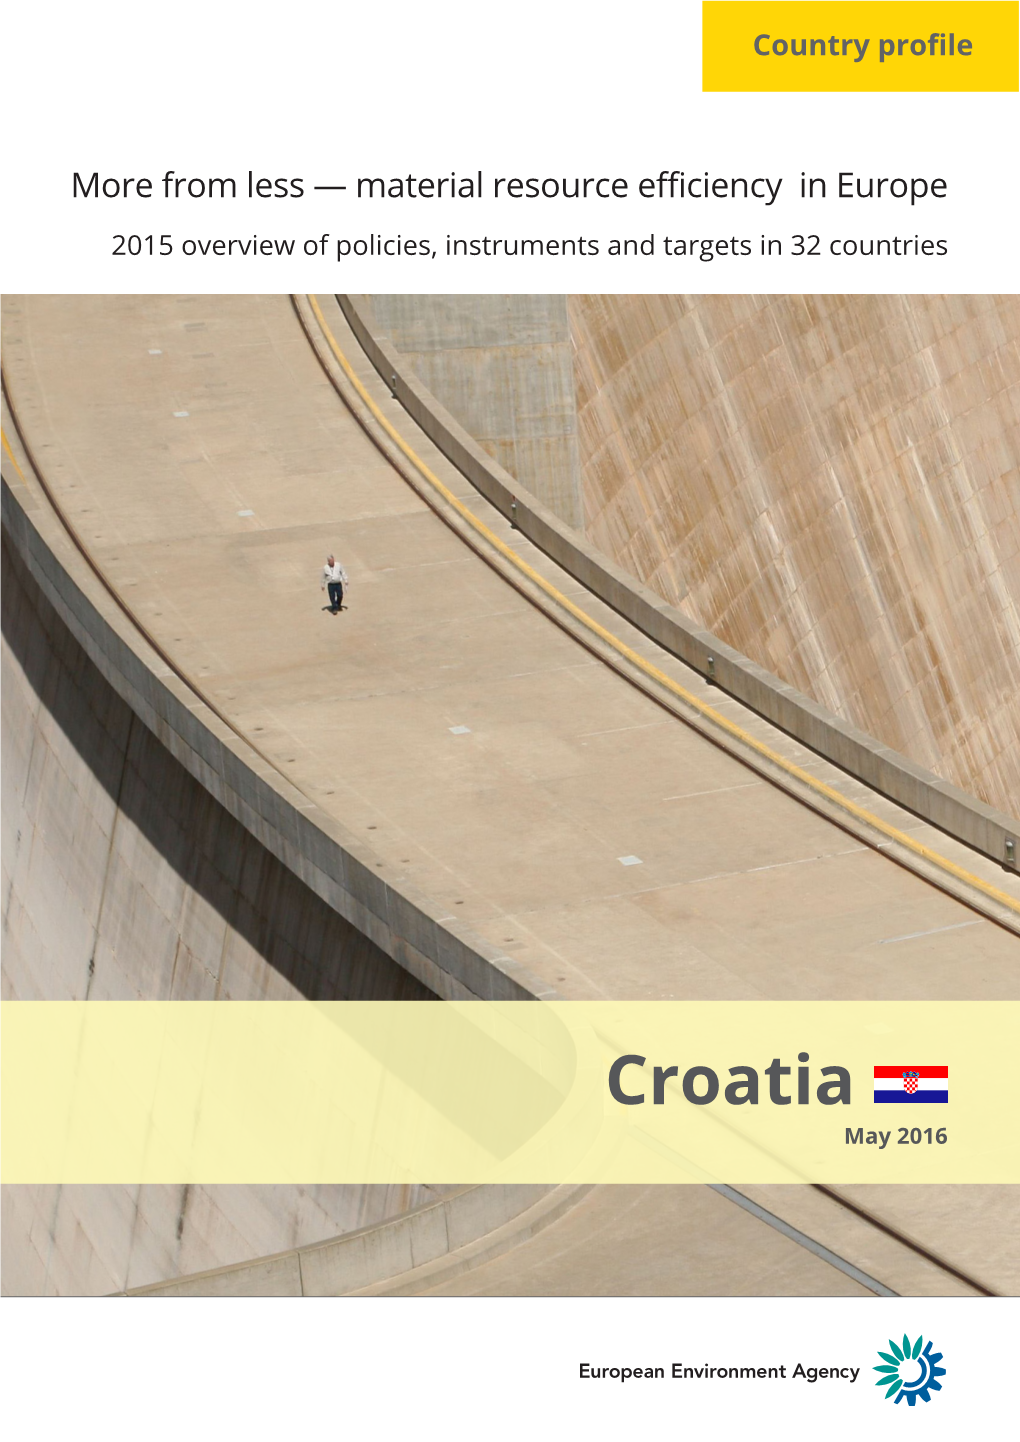 Croatia May 2016 Country Profile CROATIA 2015 Review of Material Resource Efficiency Policies in Europe